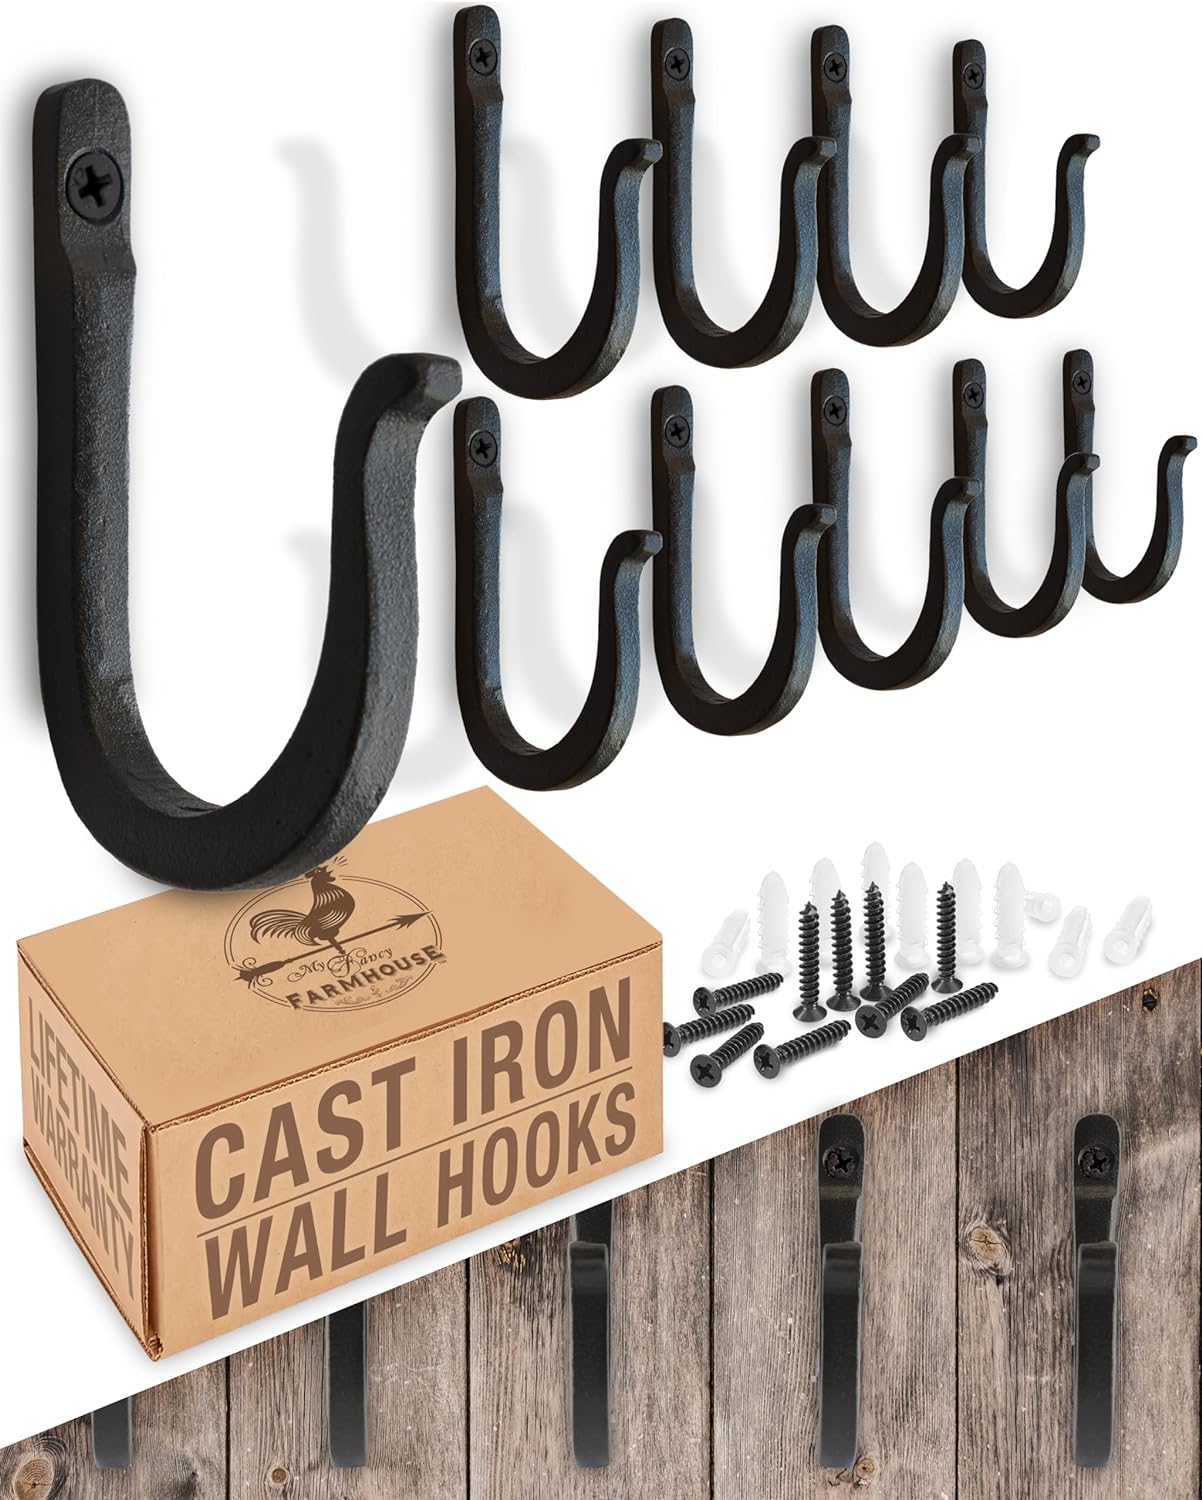 Railroad Spike Cast Iron Hooks Handmade Blacksmith, Wall Mounted, Farmhouse Decor Cast Iron Wall Hooks, Vintage Hooks for Hanging